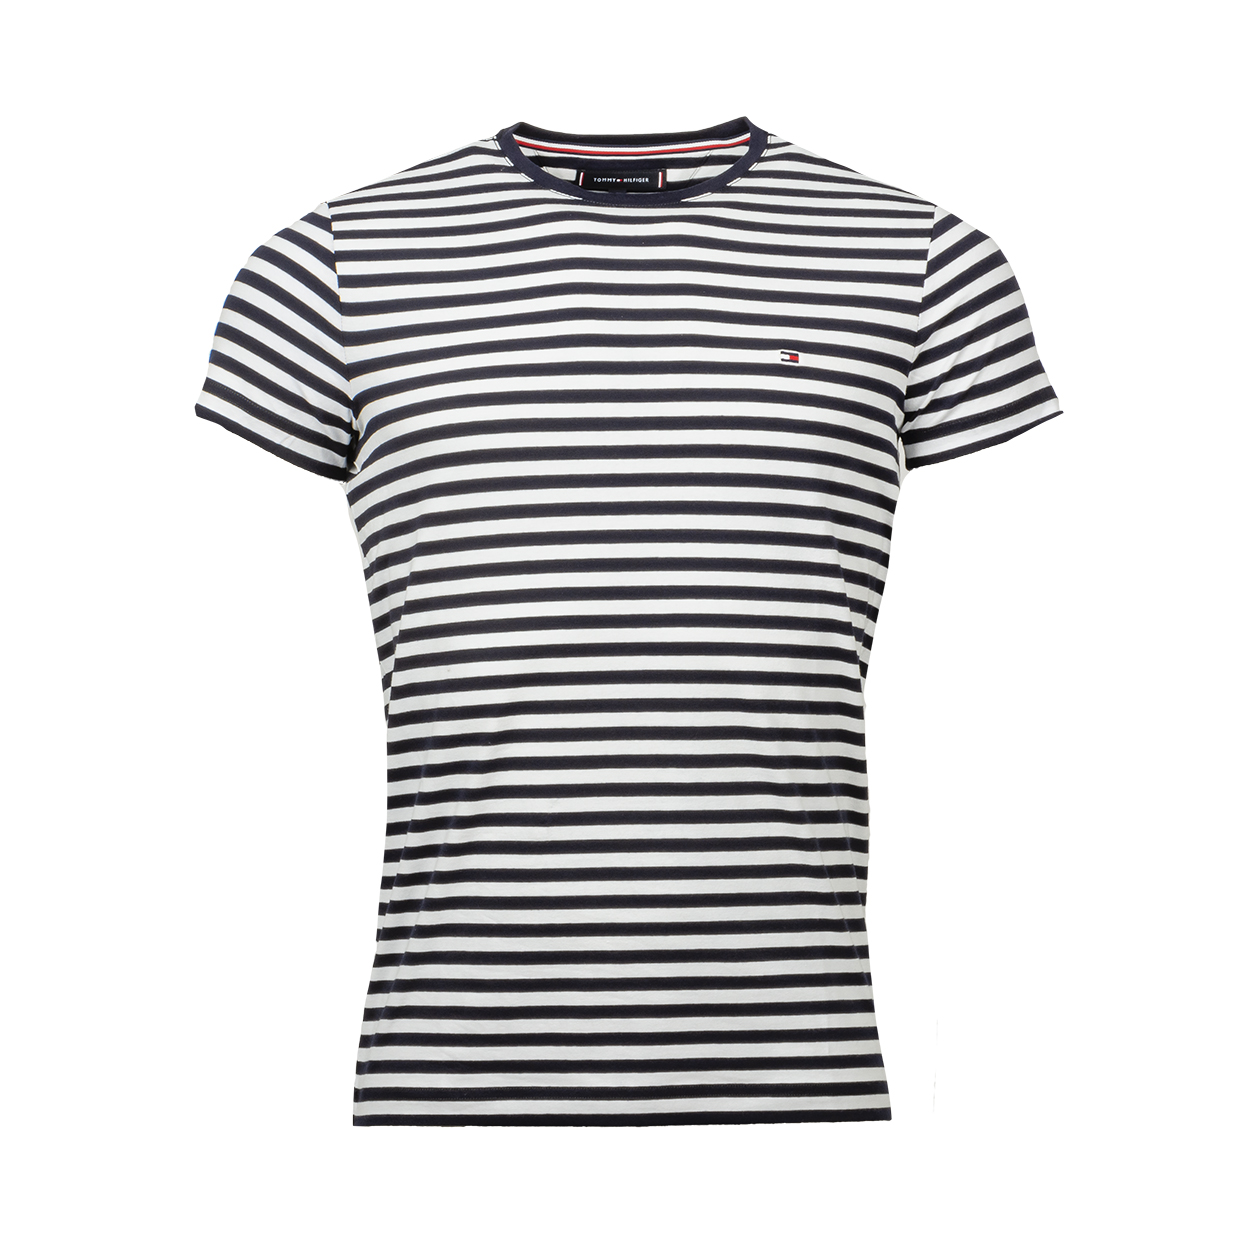 Tee-shirt slim Tommy Hilfiger en coton stretch bleu marine et blanc rayé